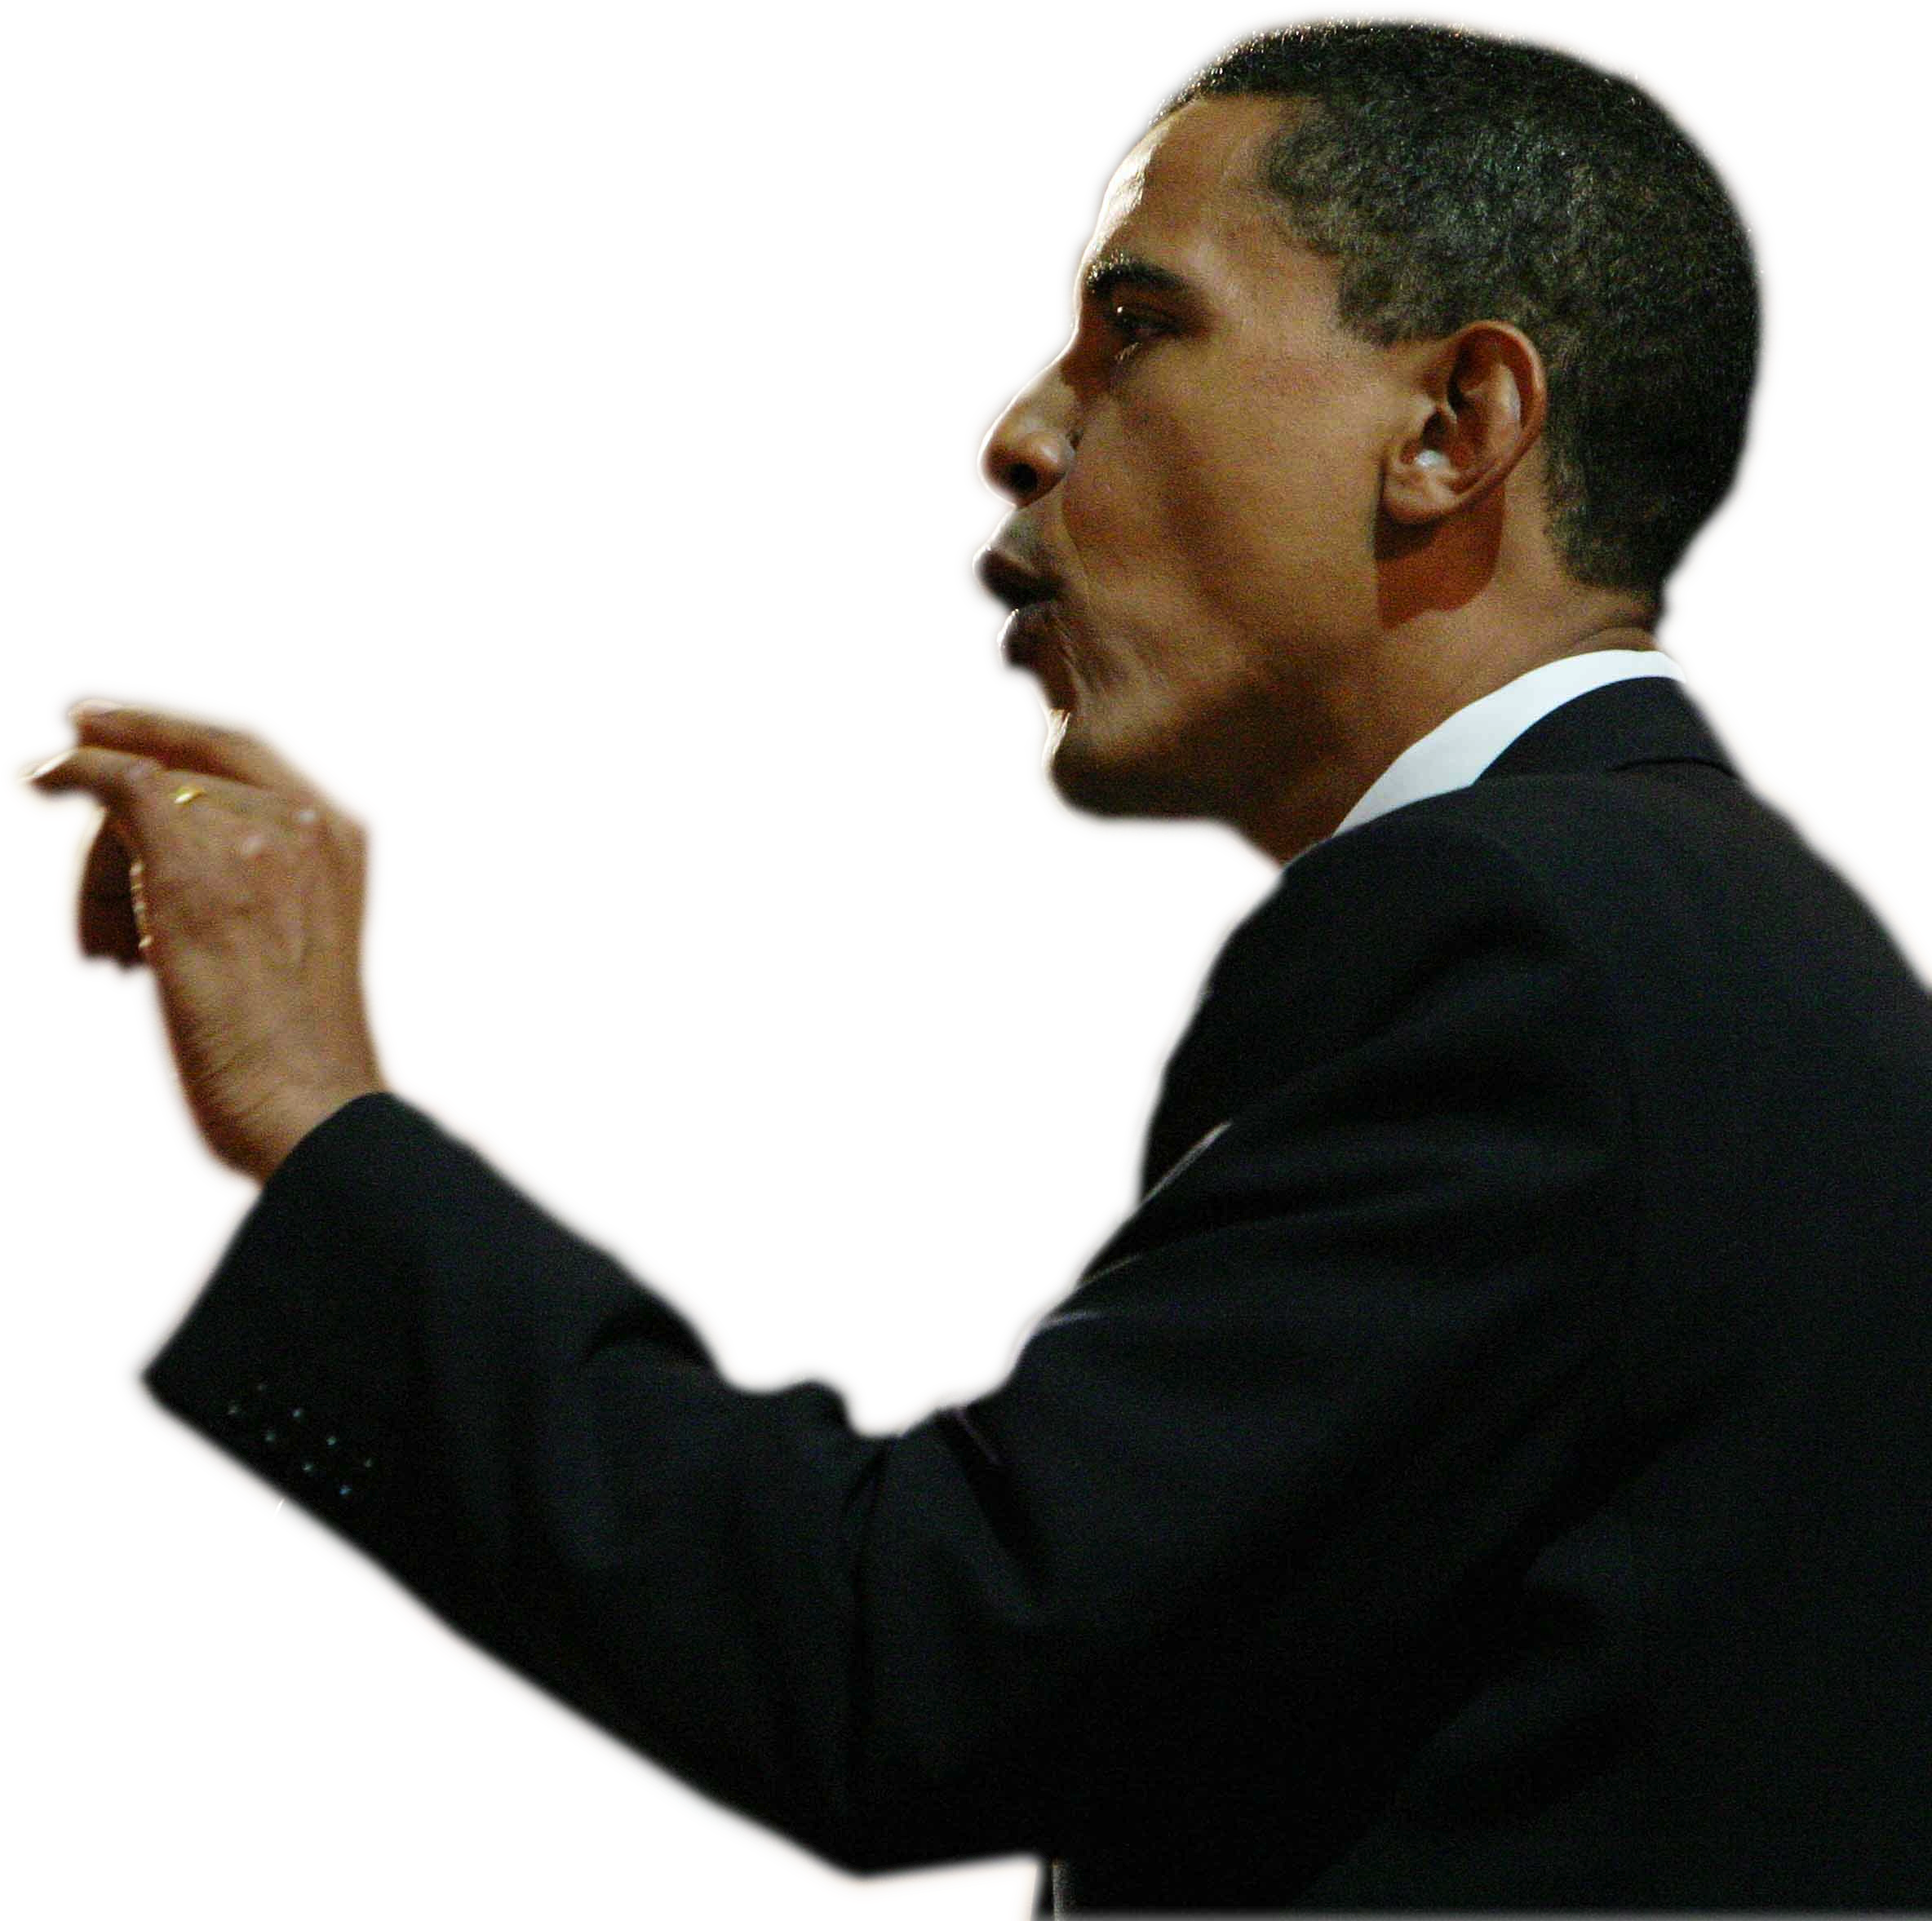 Barack Obama Speaking Gesture